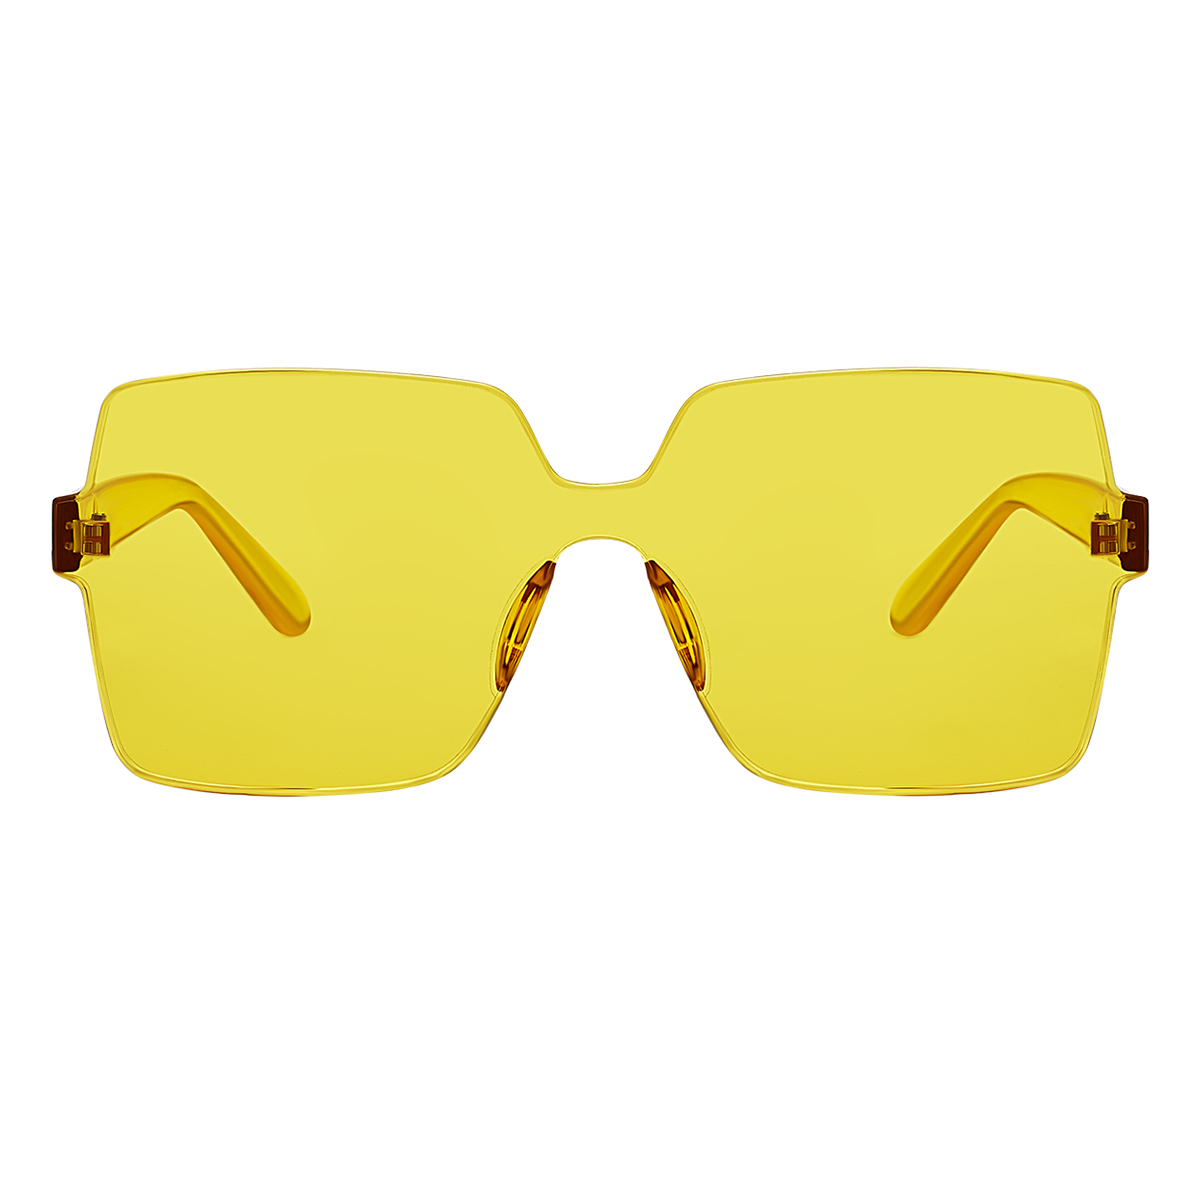 geometric yellow sunglasses